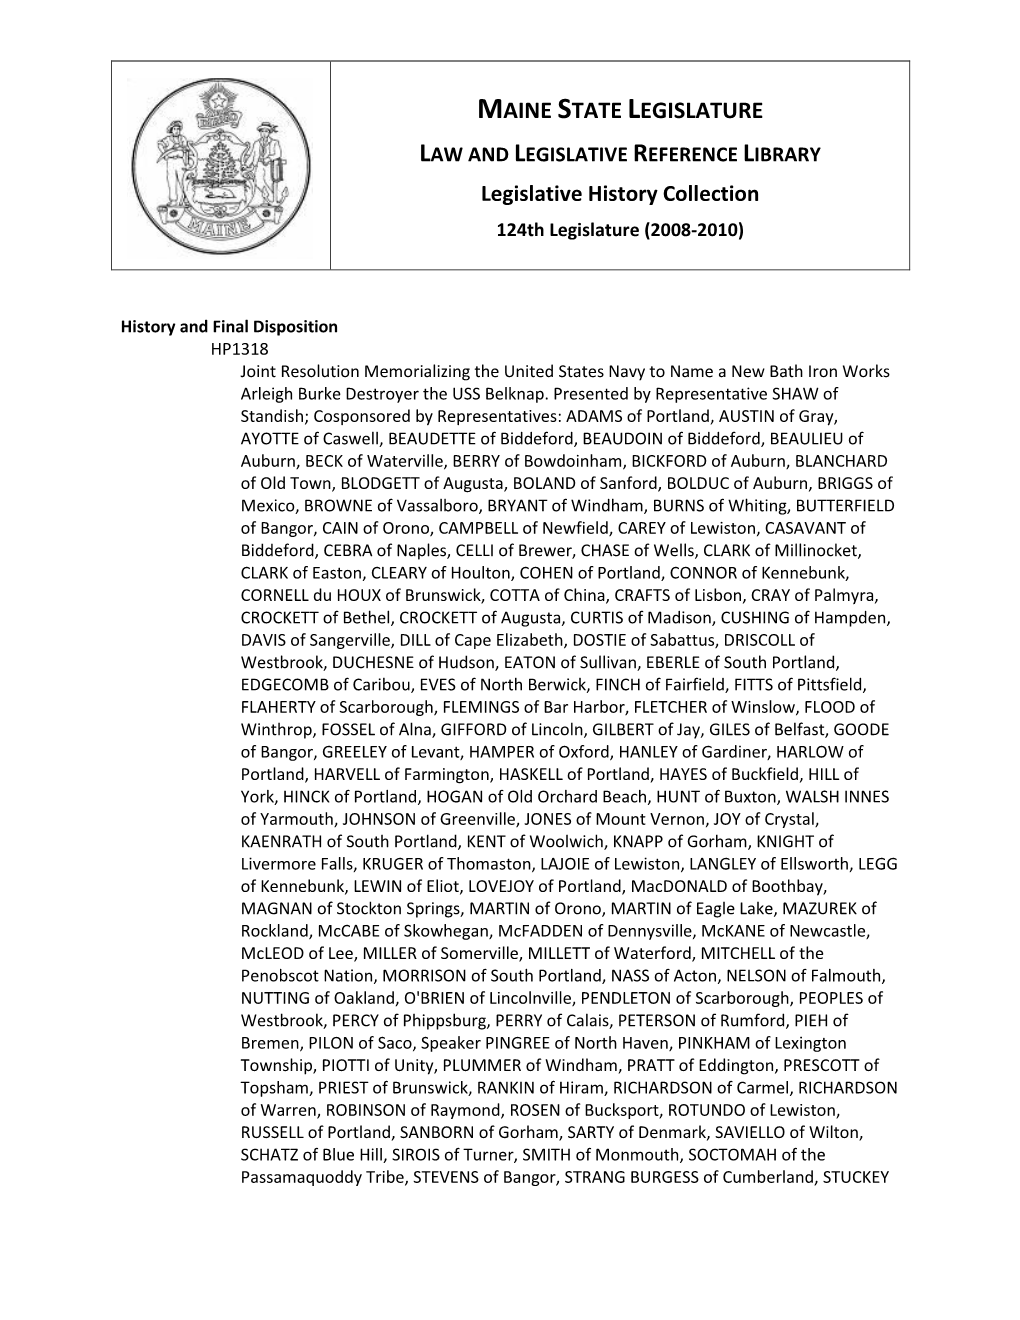 Legislative History: Joint Resolution Memorializing The